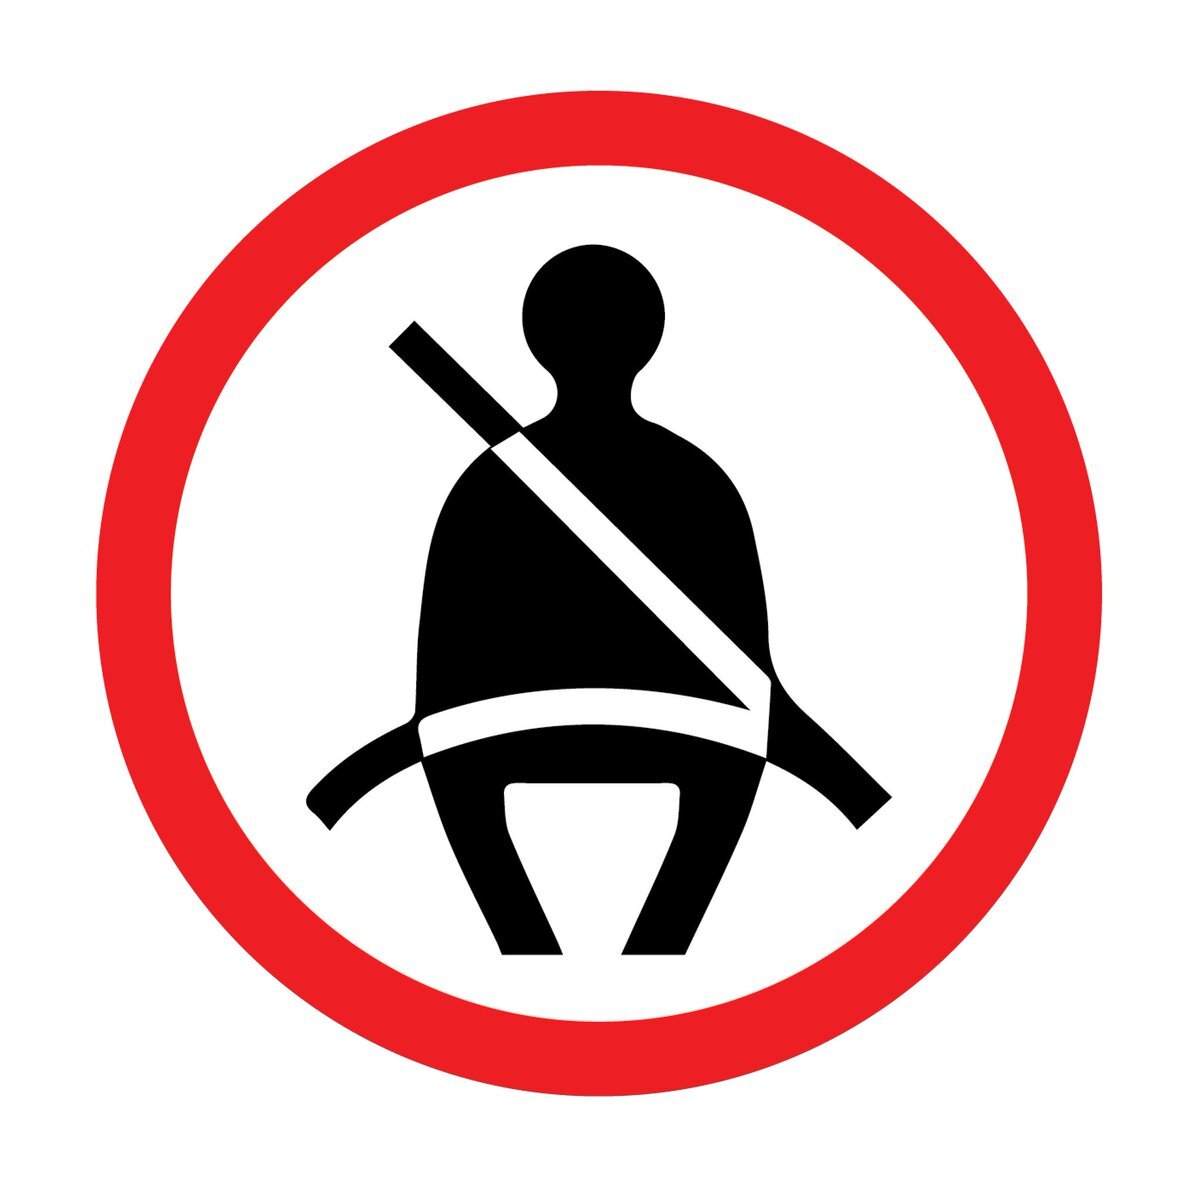 Знаки безопасности в автомобиле. Знак ремень безопасности. Пристегните ремни табличка. Знак пристегните ремни безопасности. Знак пристегнуть ремни.